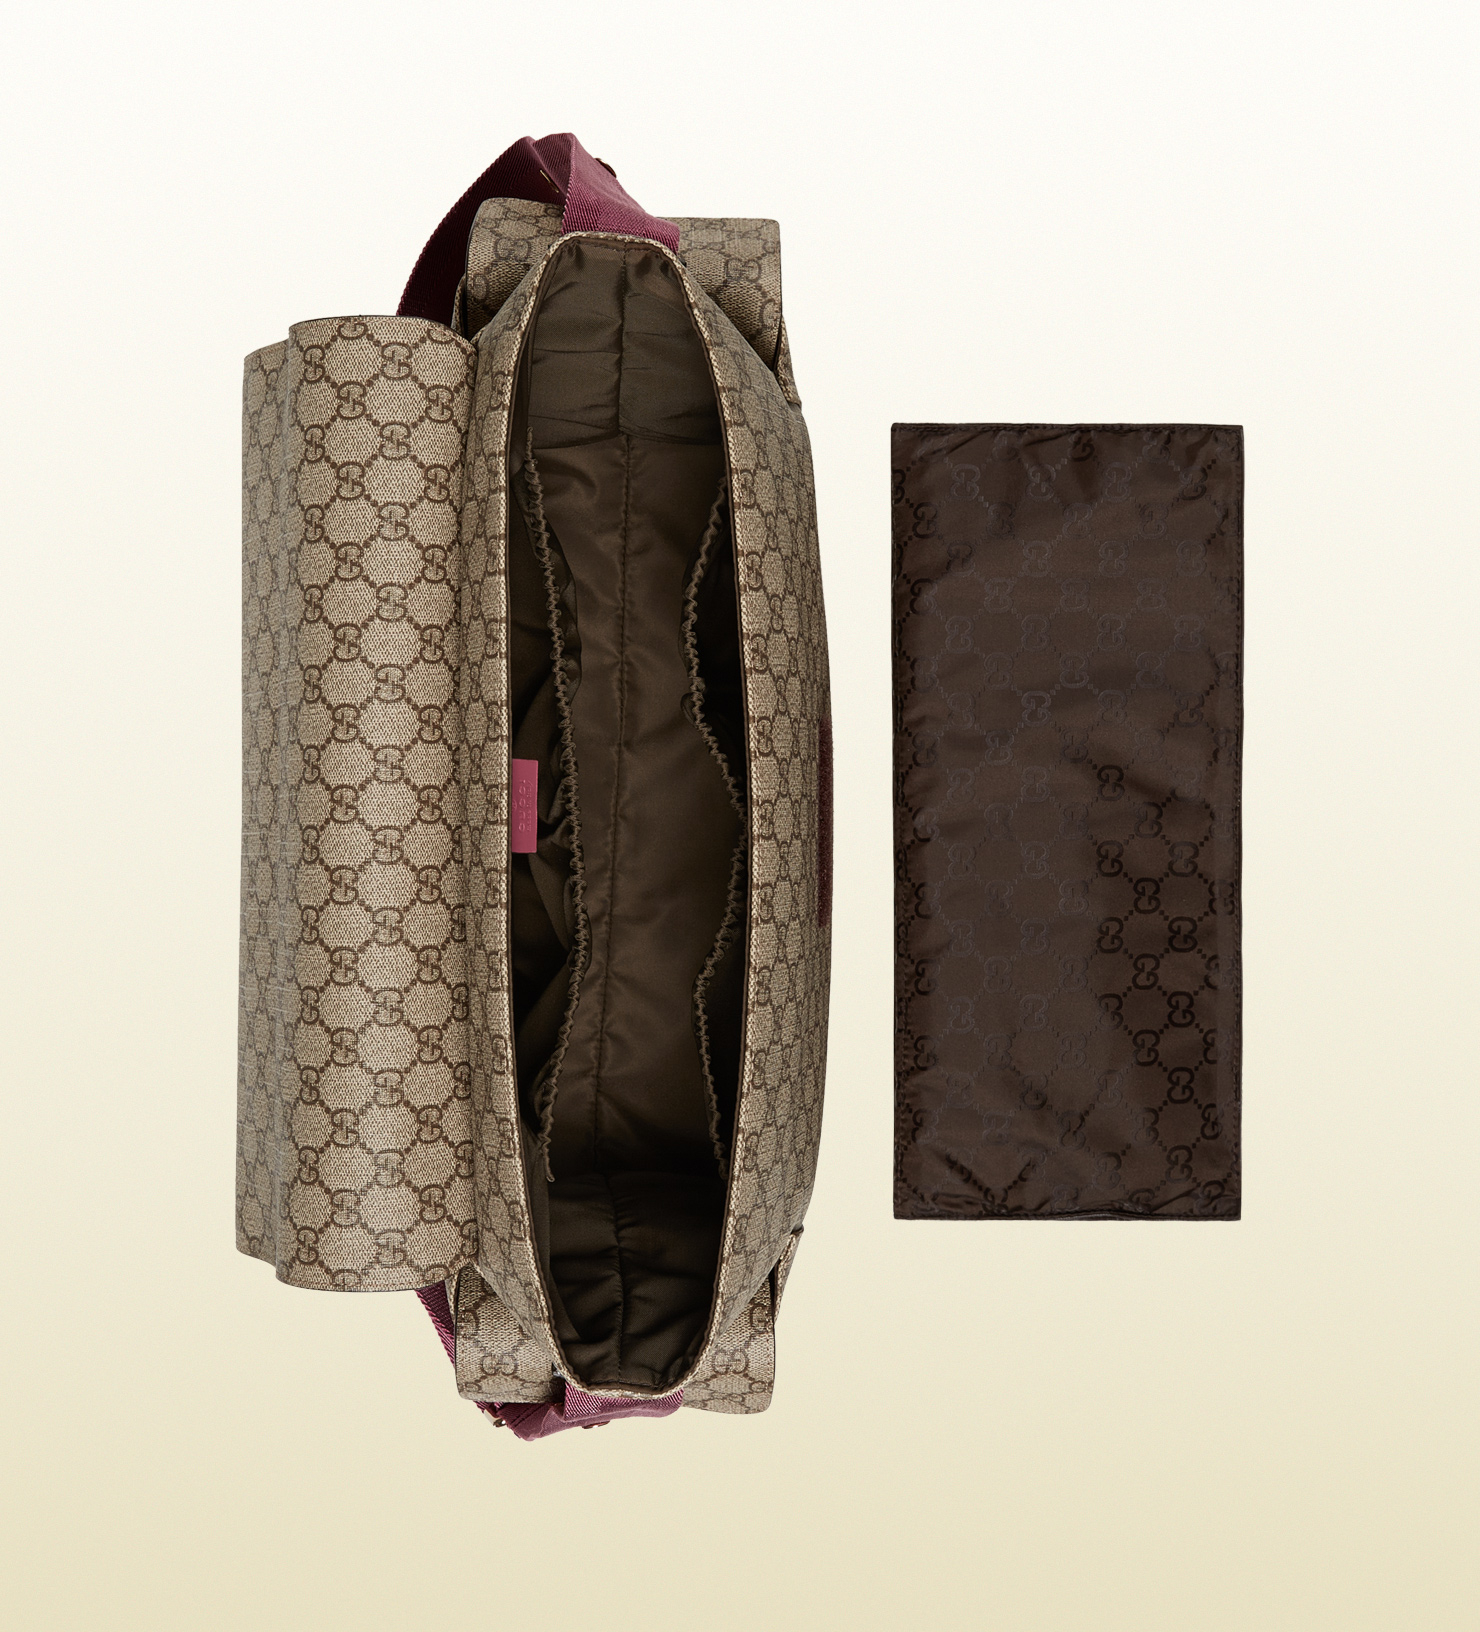 Gucci Gg Supreme Canvas Diaper Bag in Rose (Pink) - Lyst